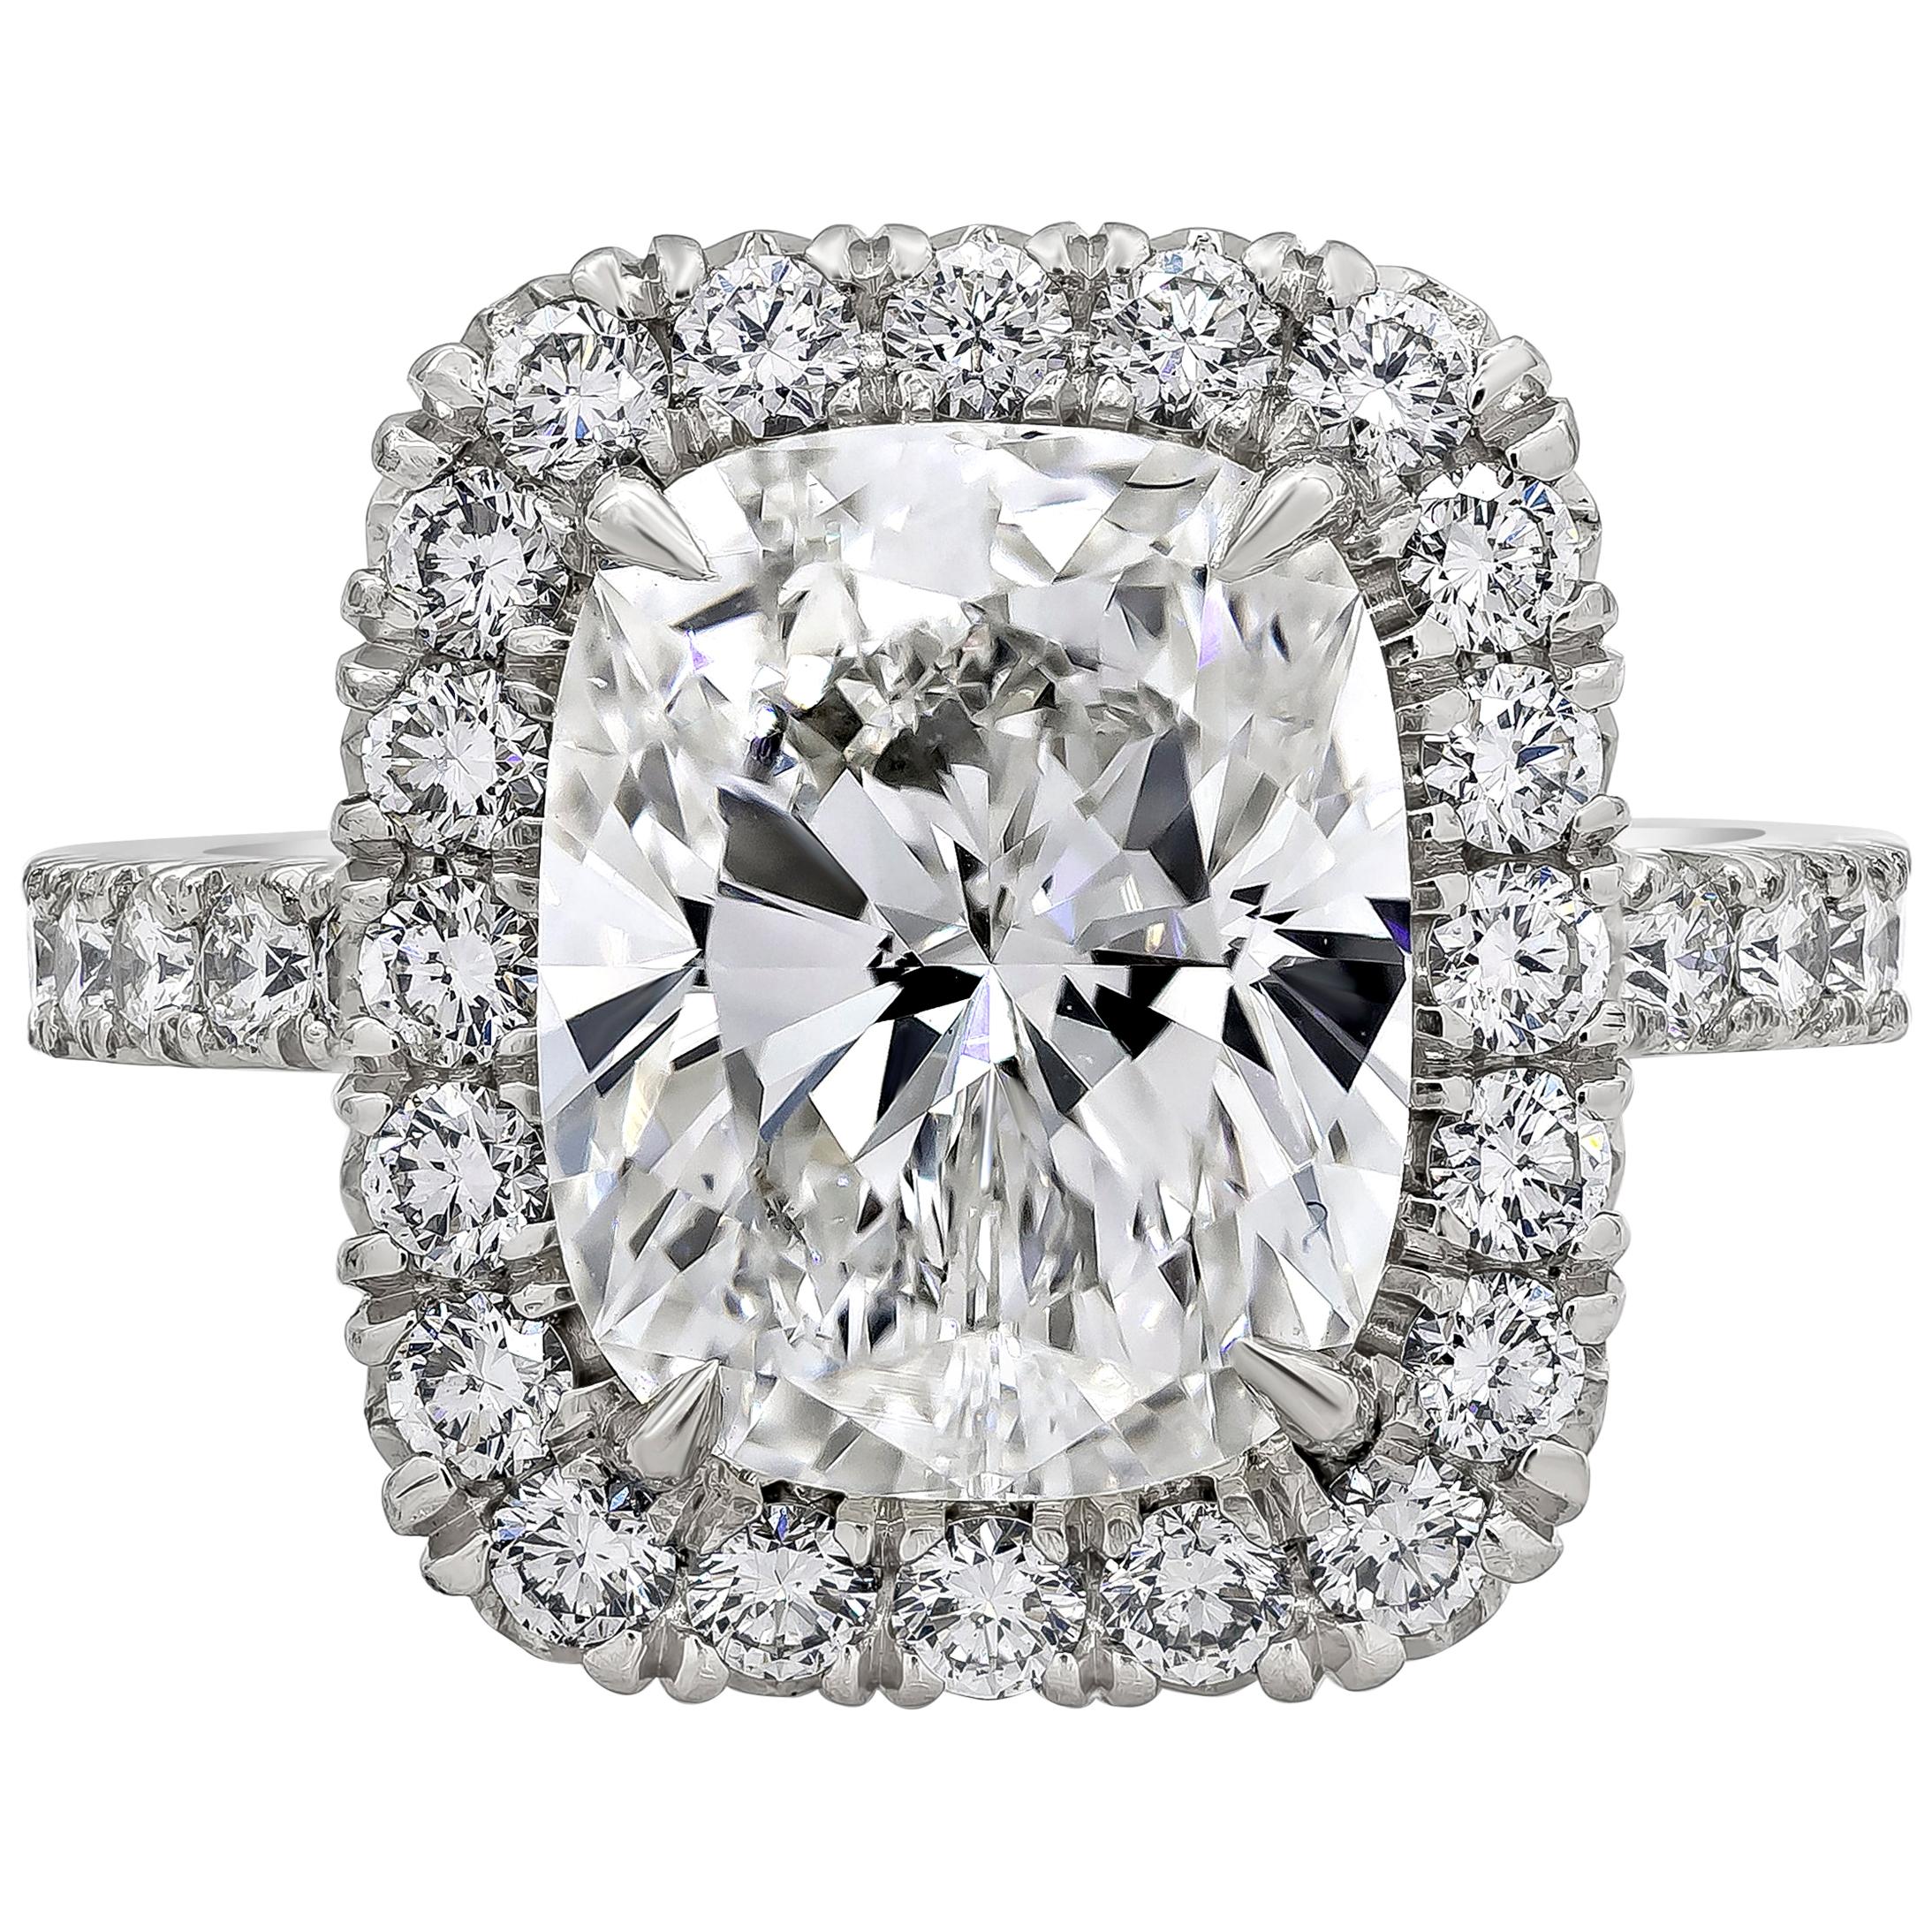 Roman Malakov GIA Certified 5.01 Carats Cushion Cut Diamond Halo Engagement Ring